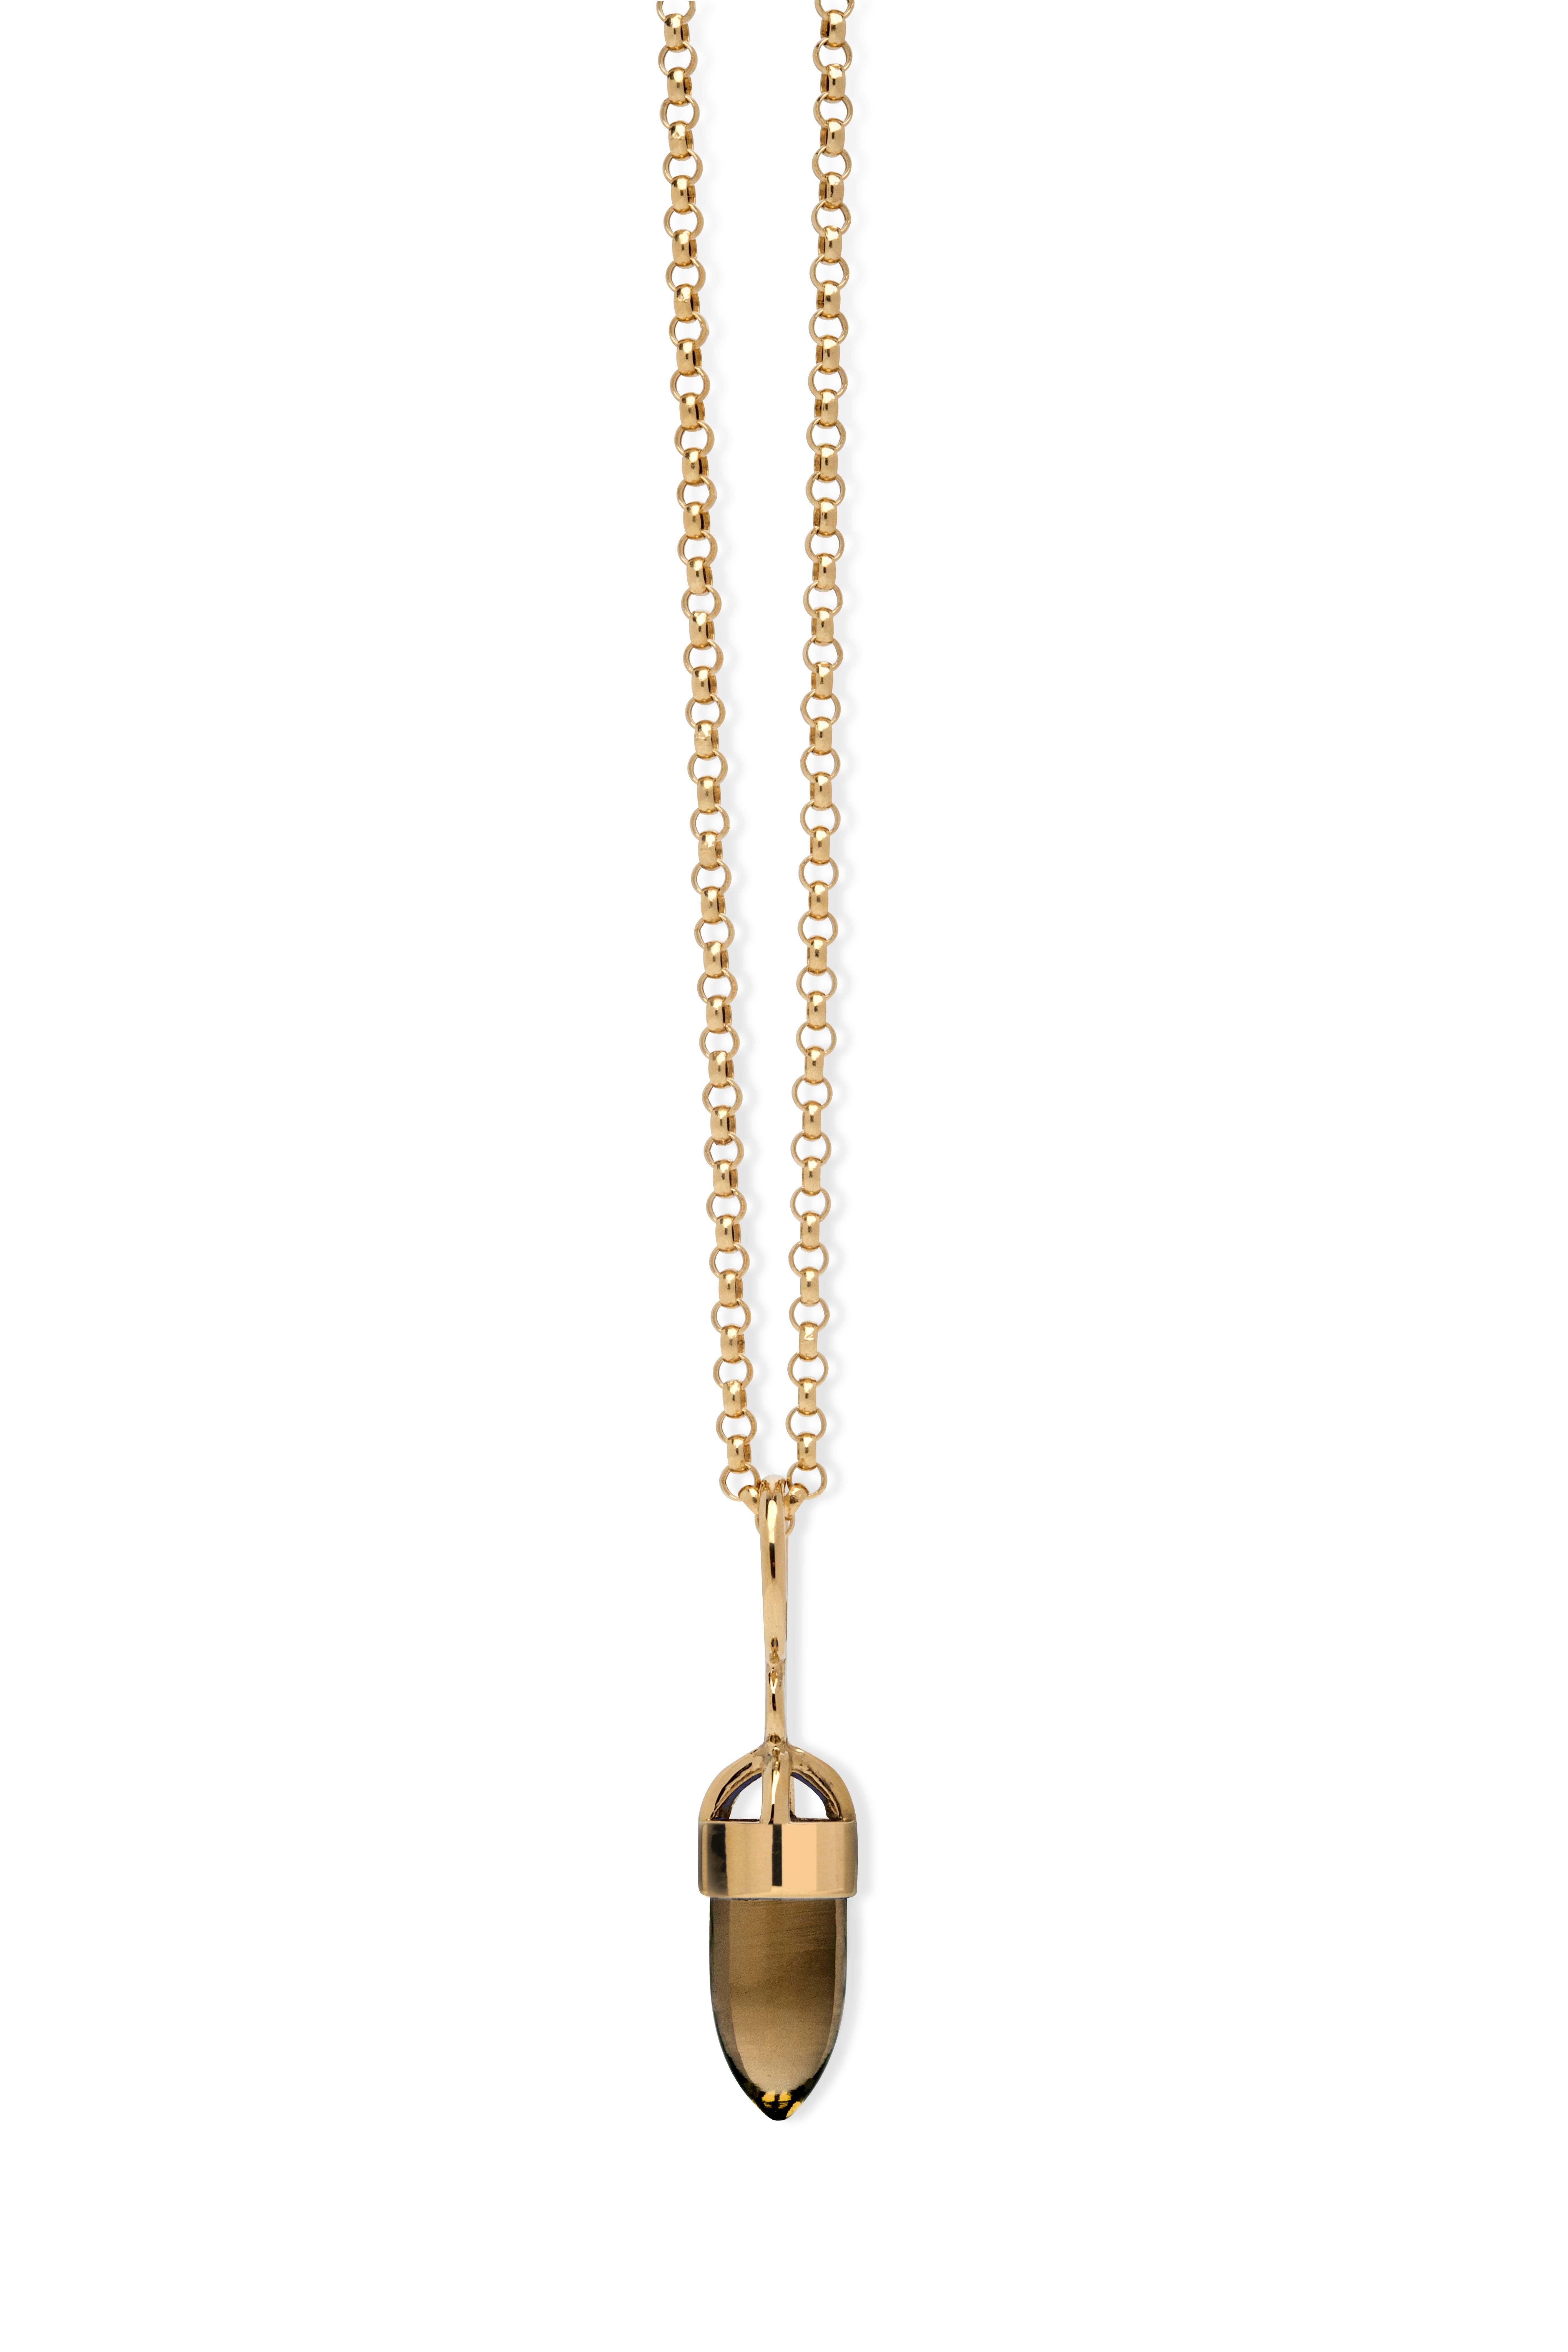 MAVIADA's Modern Minimalist Pink Stone 18 Karat Yellow Gold Pendant Necklace For Sale 3